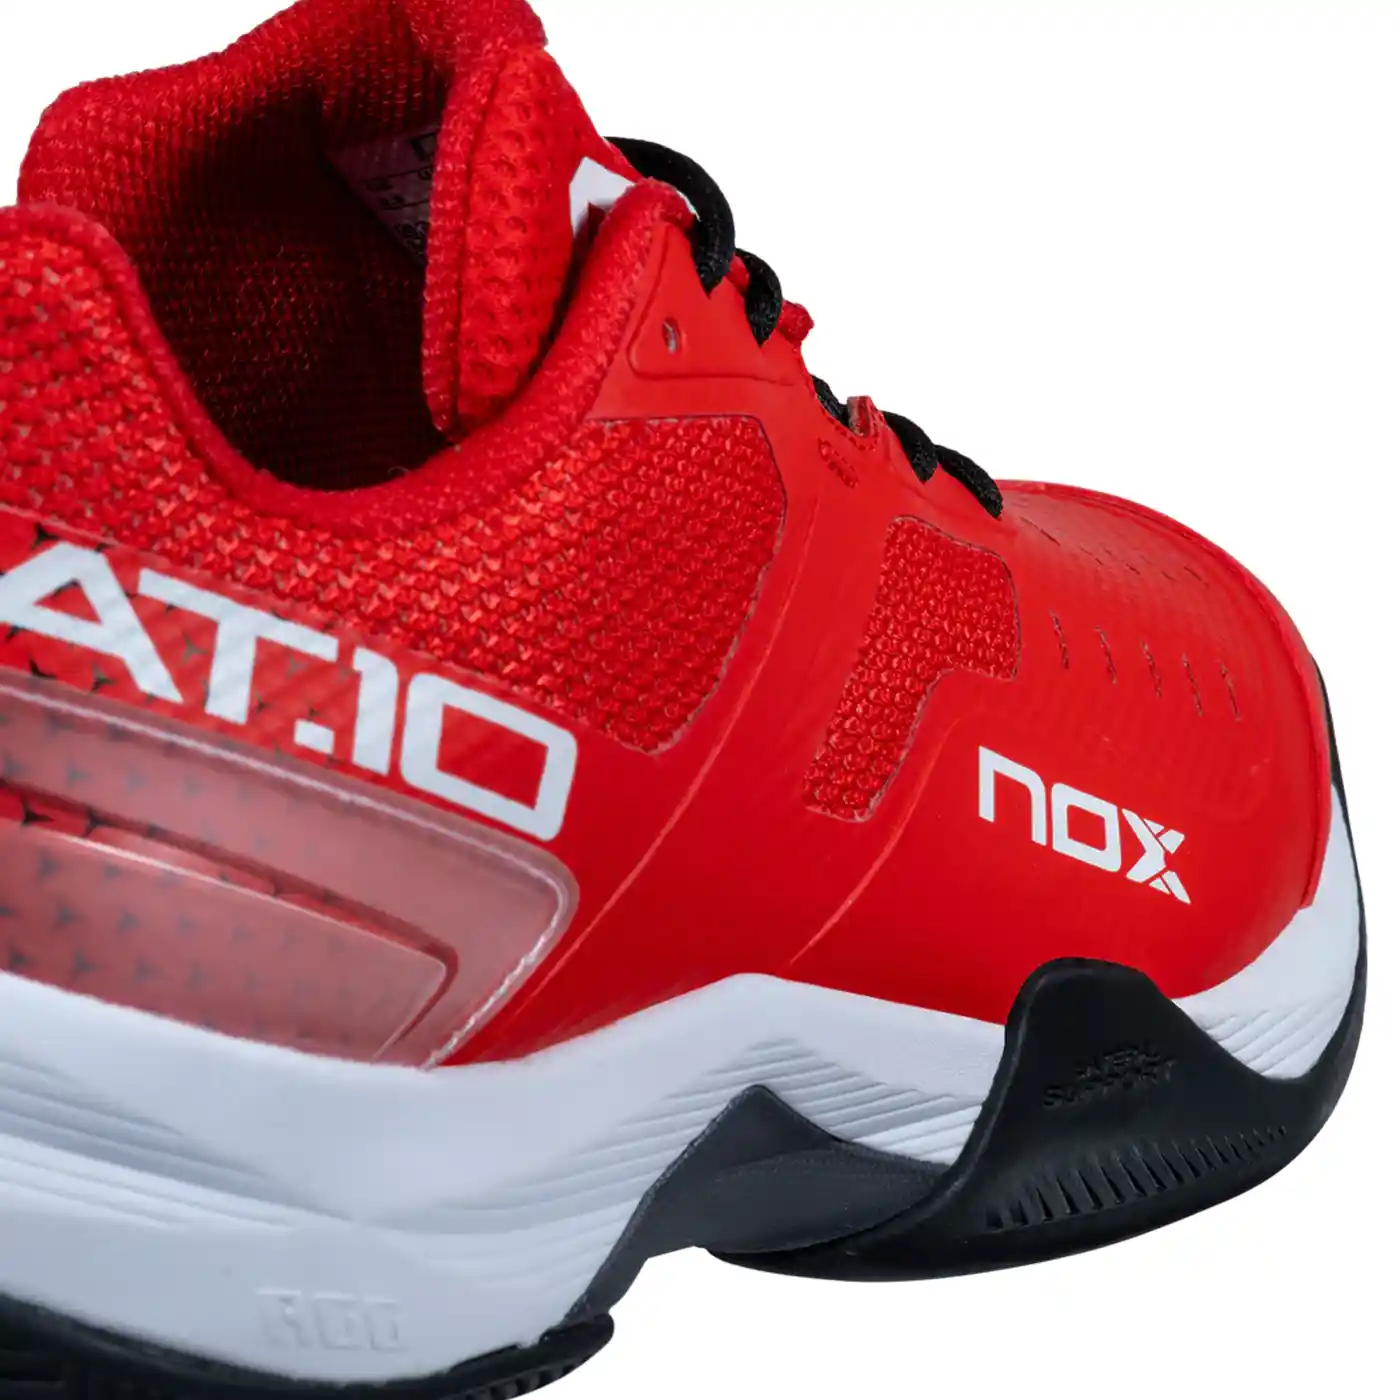 Nox Padel Shoes AT10 RedBlack padel shoes for men Image 10